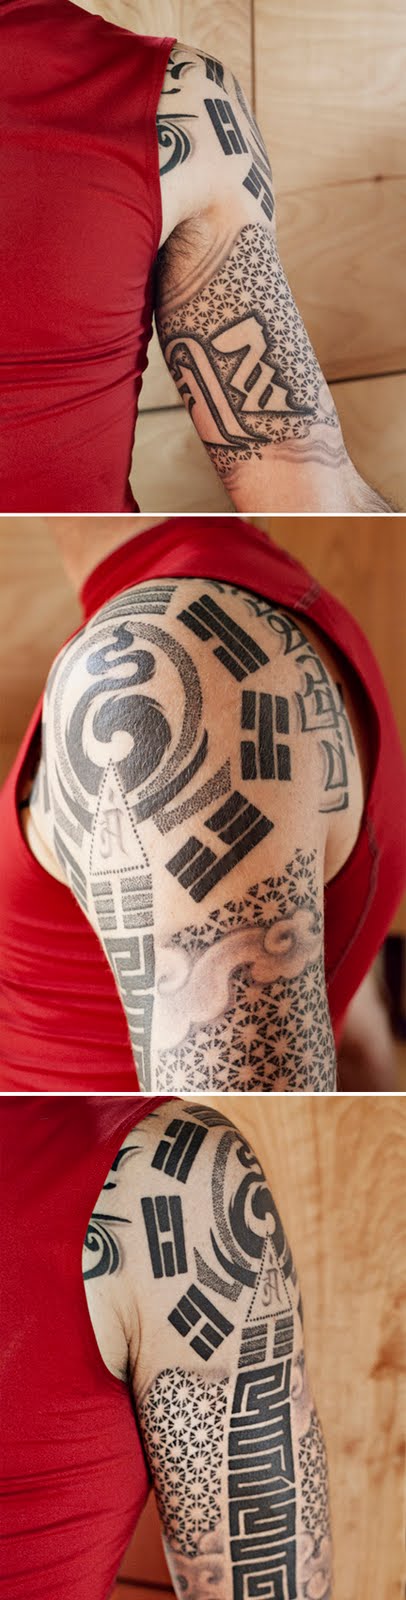 Click here for tattoo designs at inkessentialcom tibetan tattoo designs